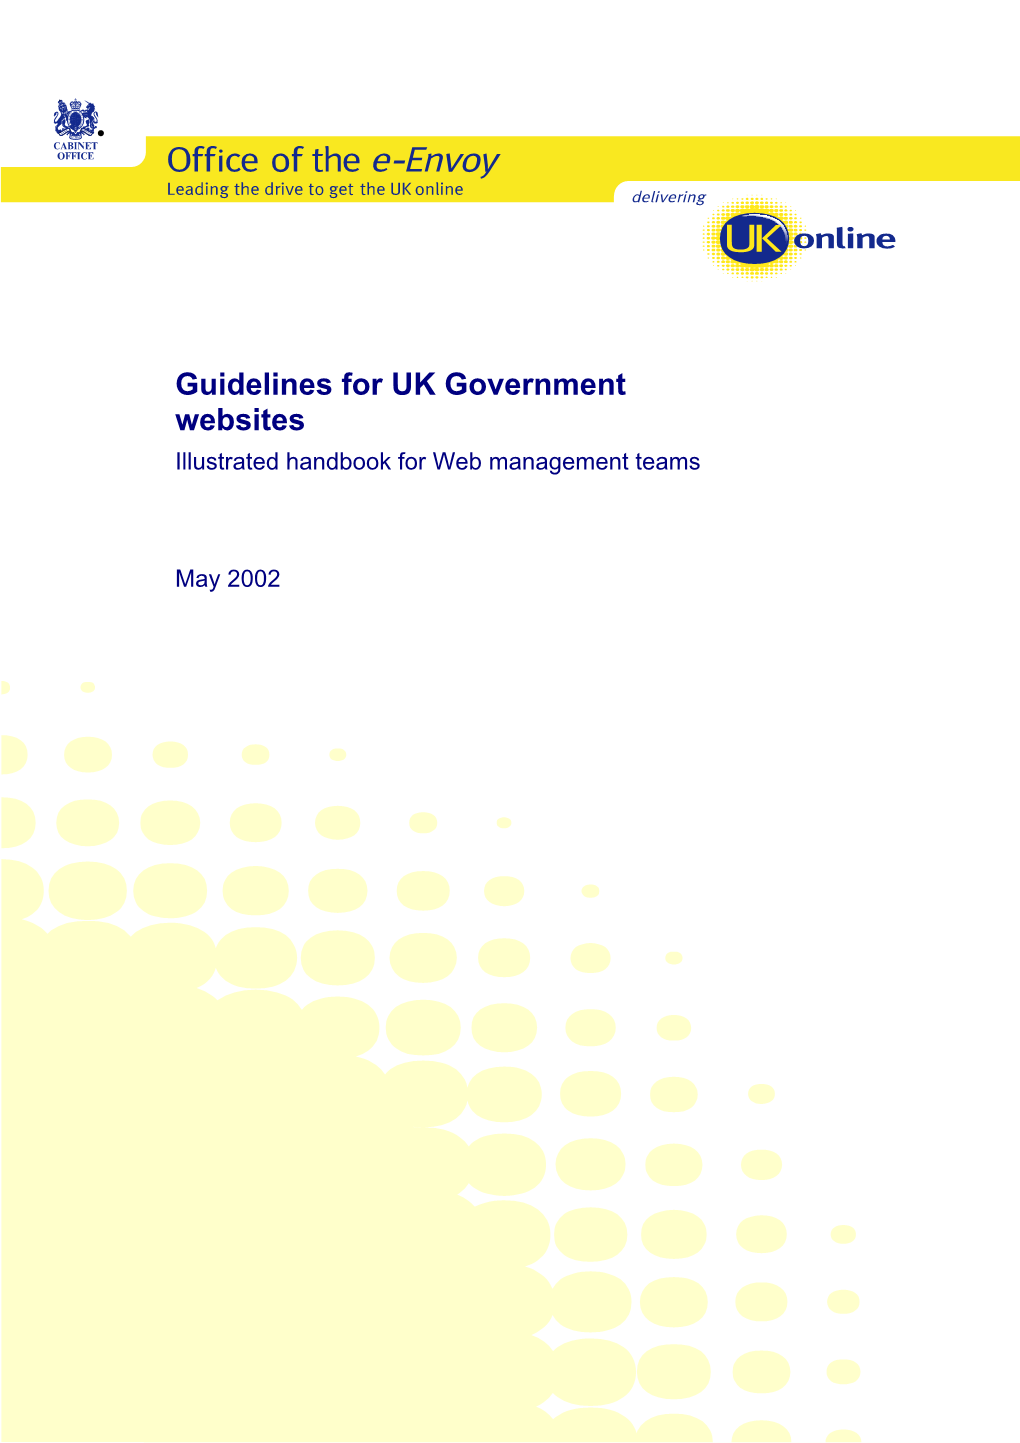 Guidelines for UK Government Websites Illustrated Handbook for Web Management Teams